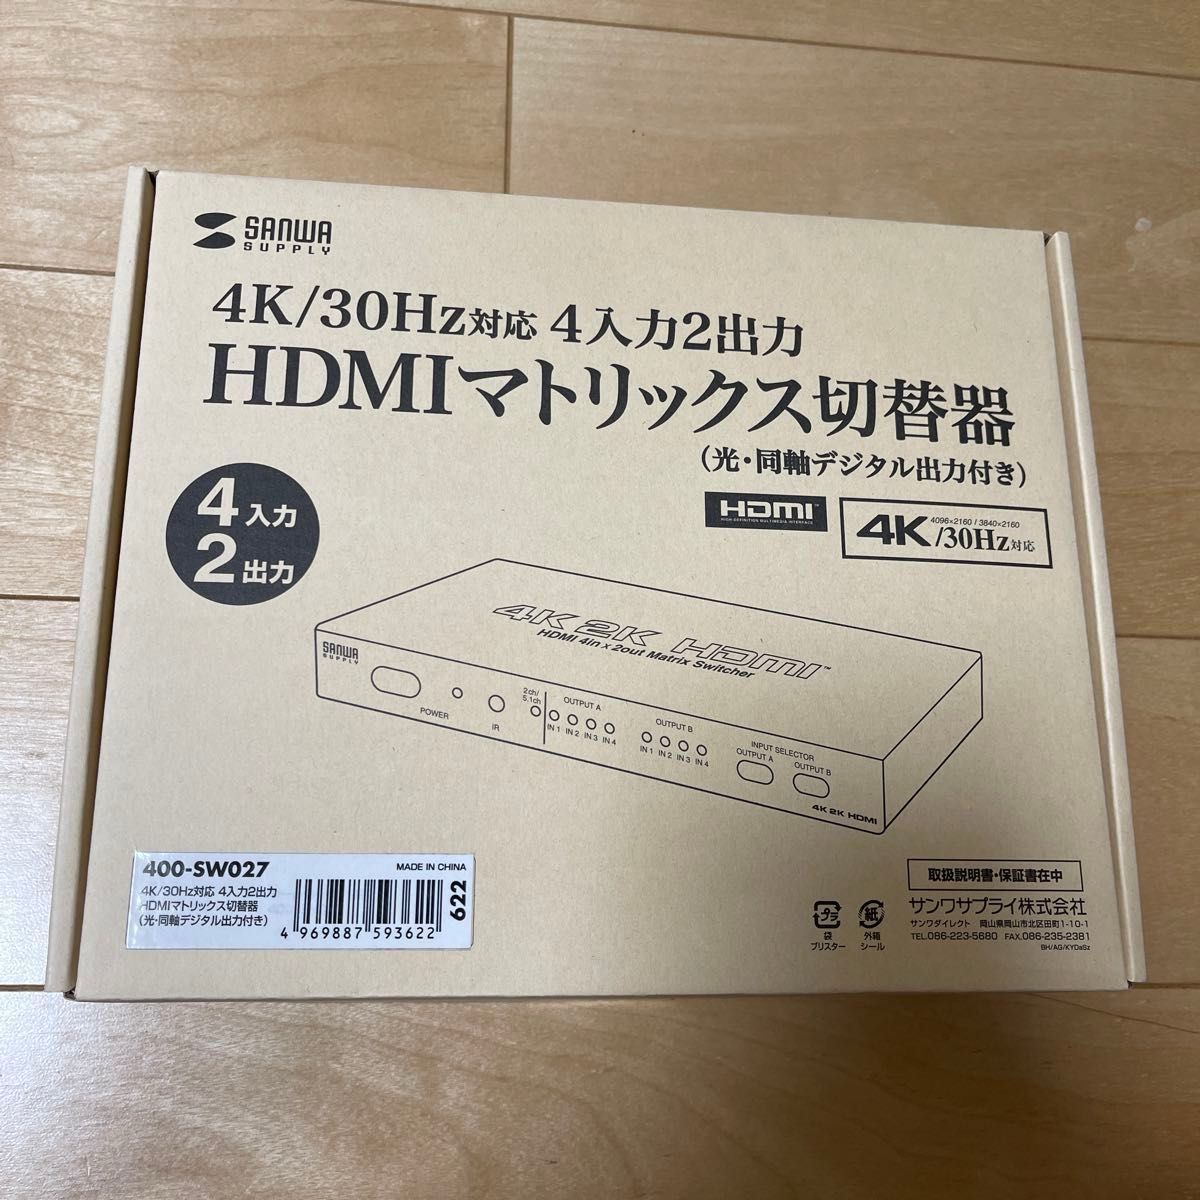 HDMIセレクター HDMI切替器 HDMI分配器 4入力 2出力 1080p 4K対応 リモコン付き